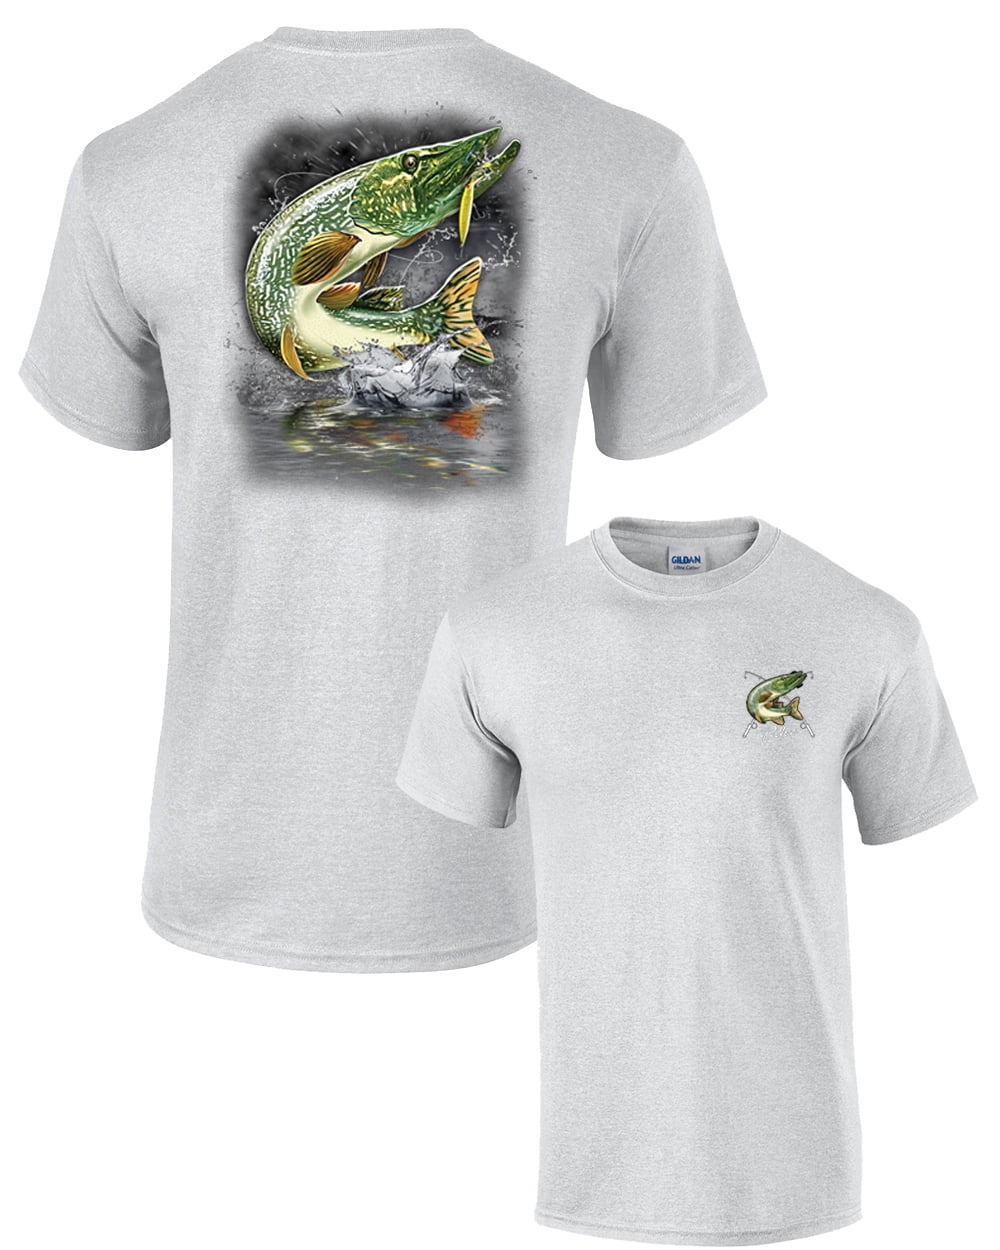 Big Bass Fishing Mens Short Sleeve T-Shirt Outdoors Angler Tee 20427hd1